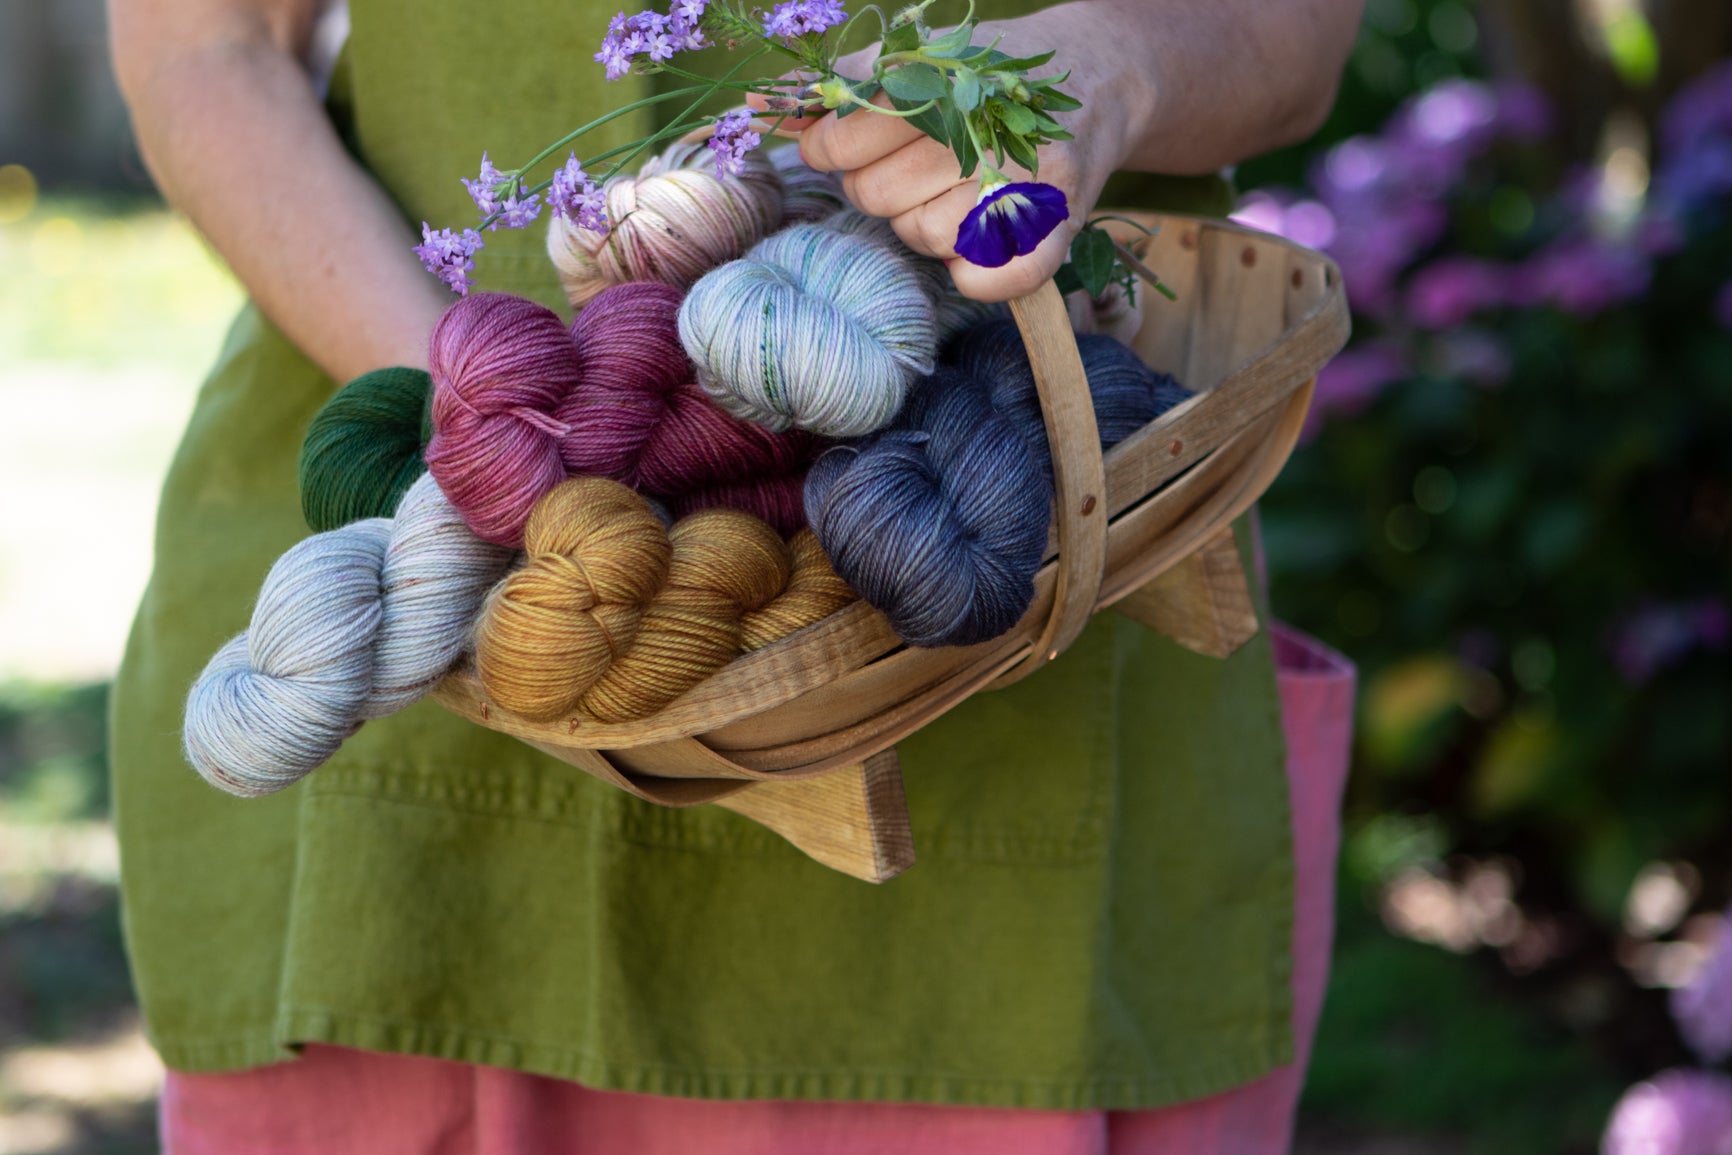 Hand-dyed yarn